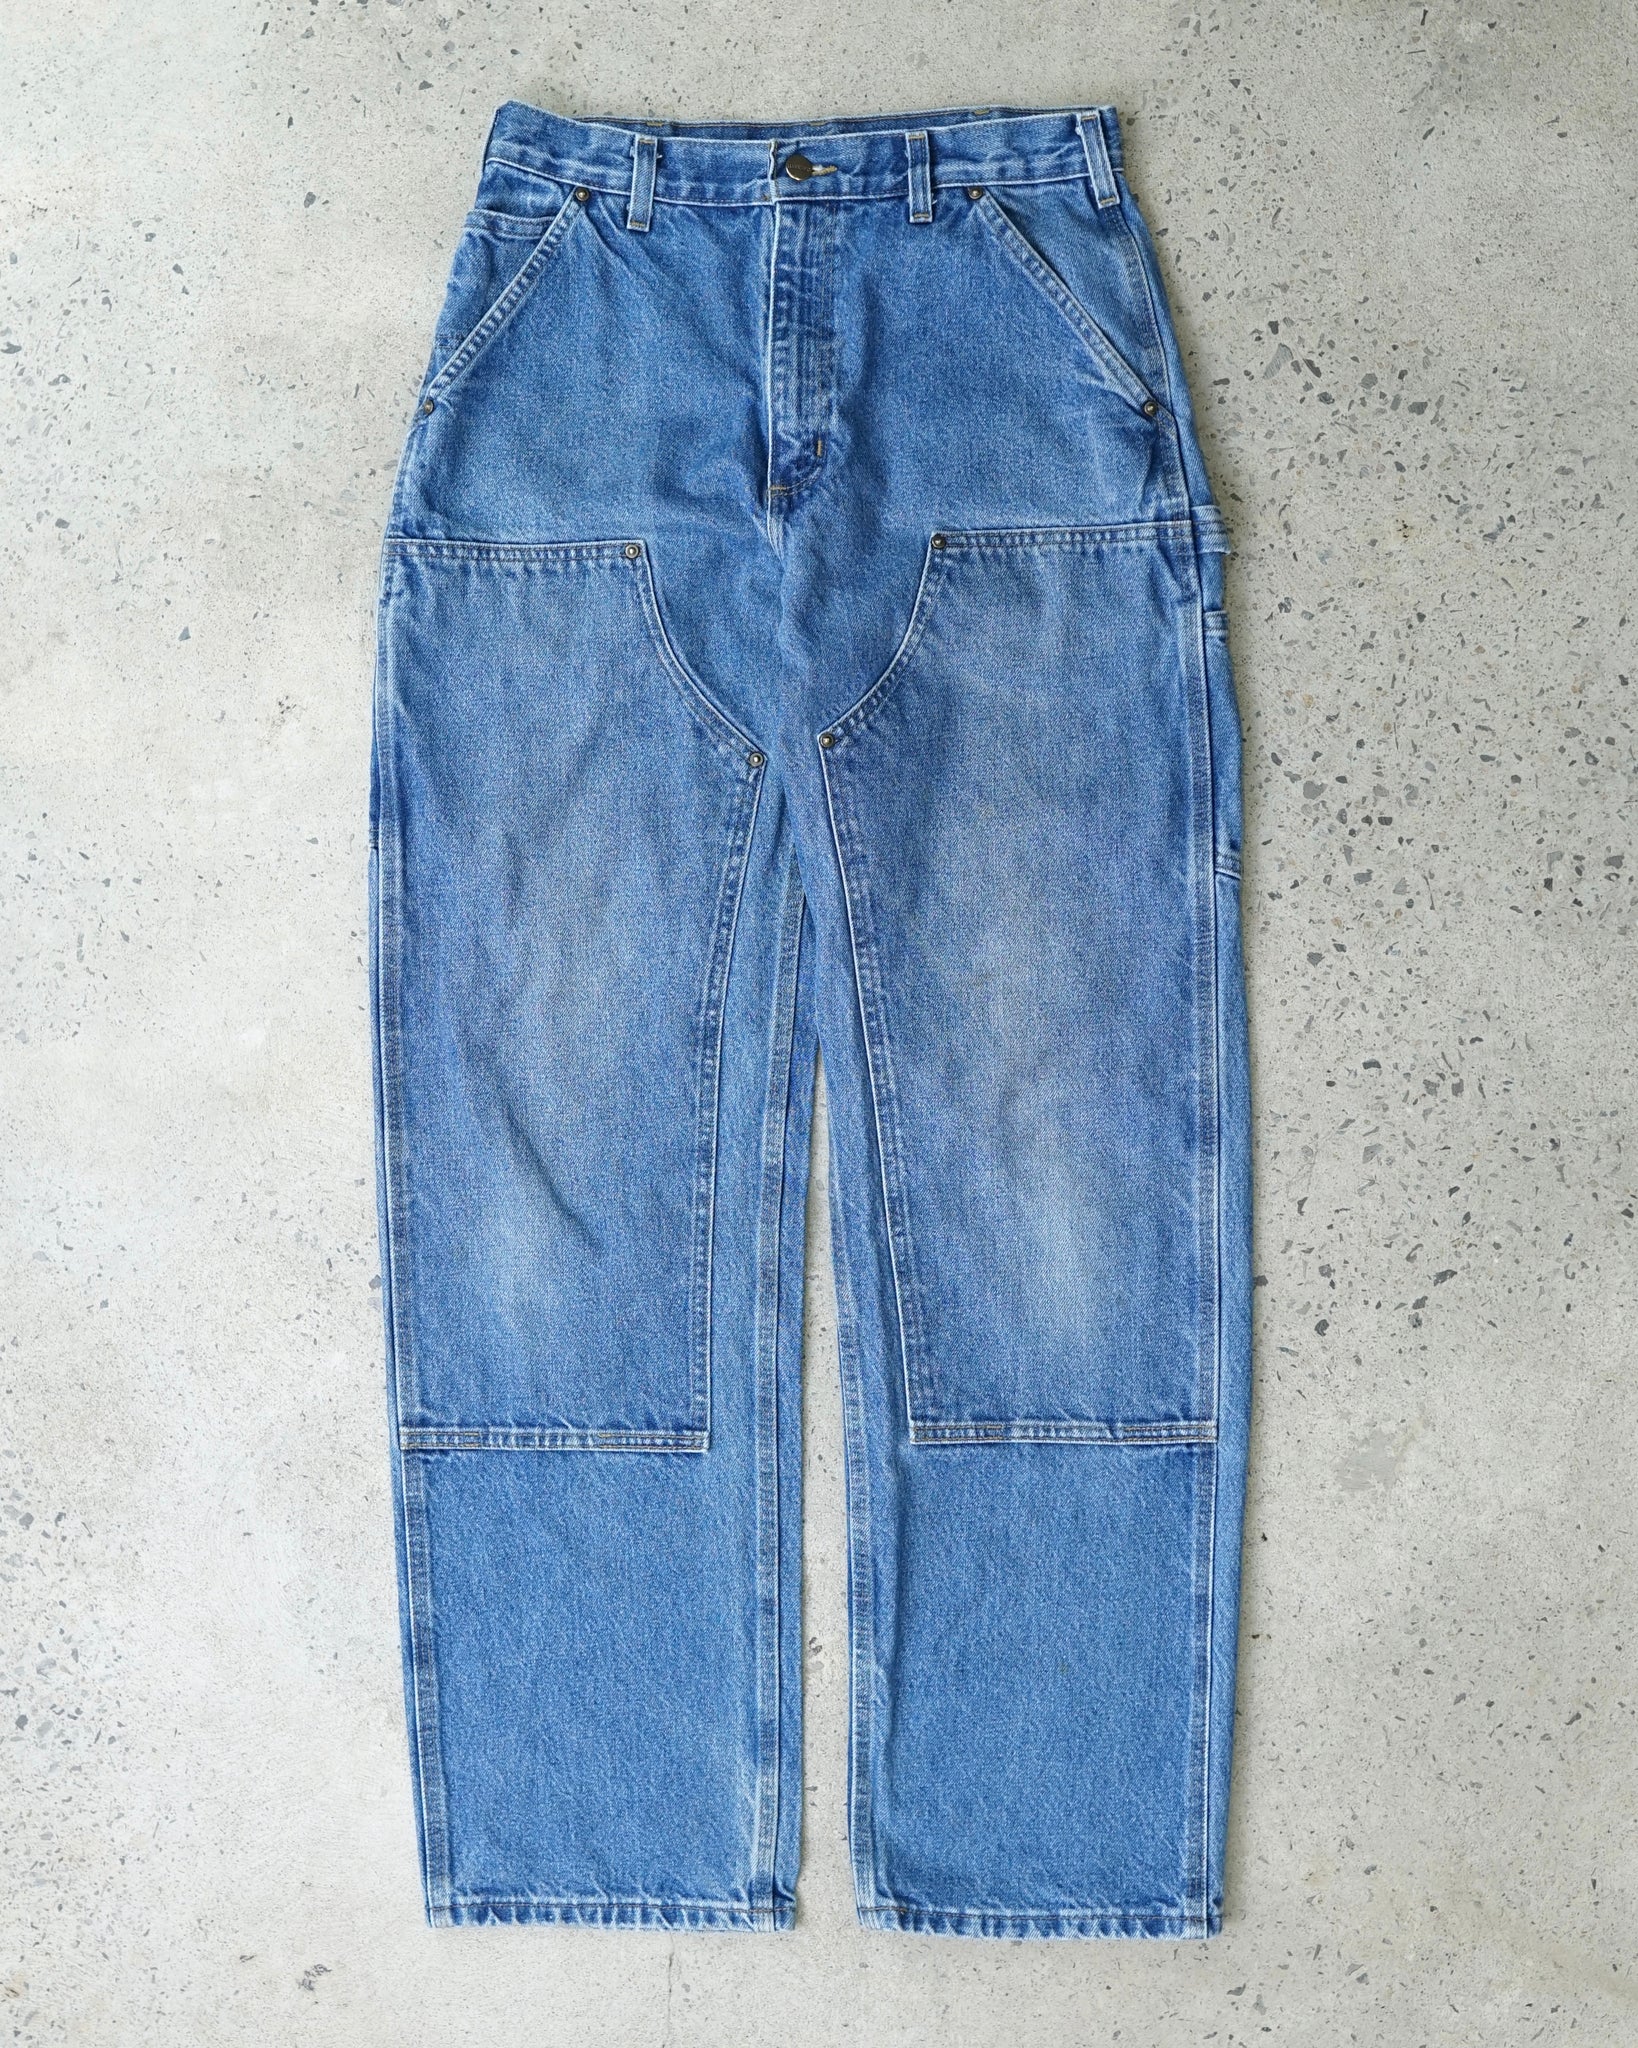 carhartt double knee carpenter jeans